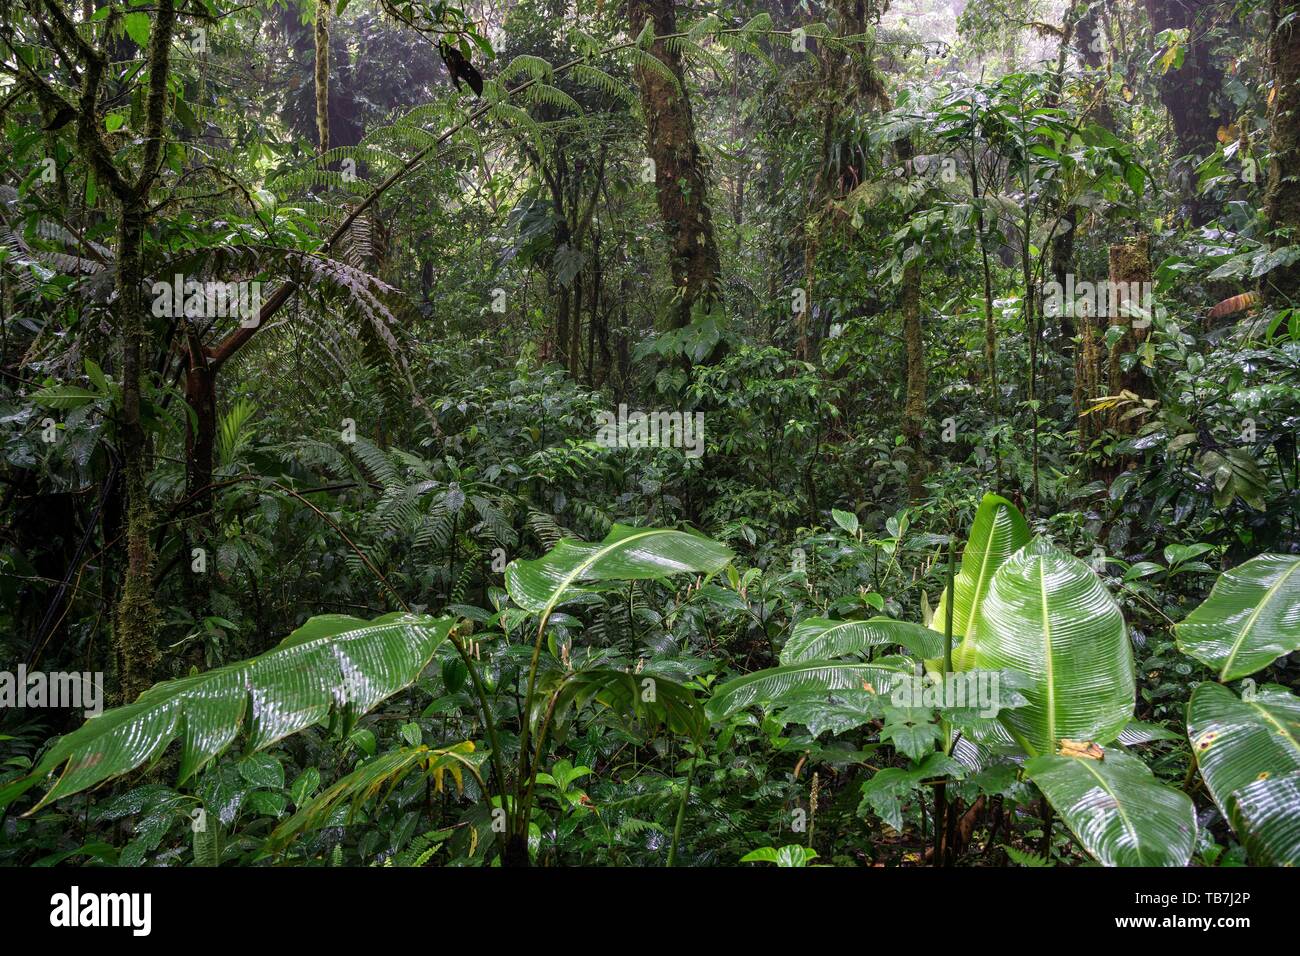 Reserva bosque nuboso santa elena hi-res stock photography and images -  Alamy